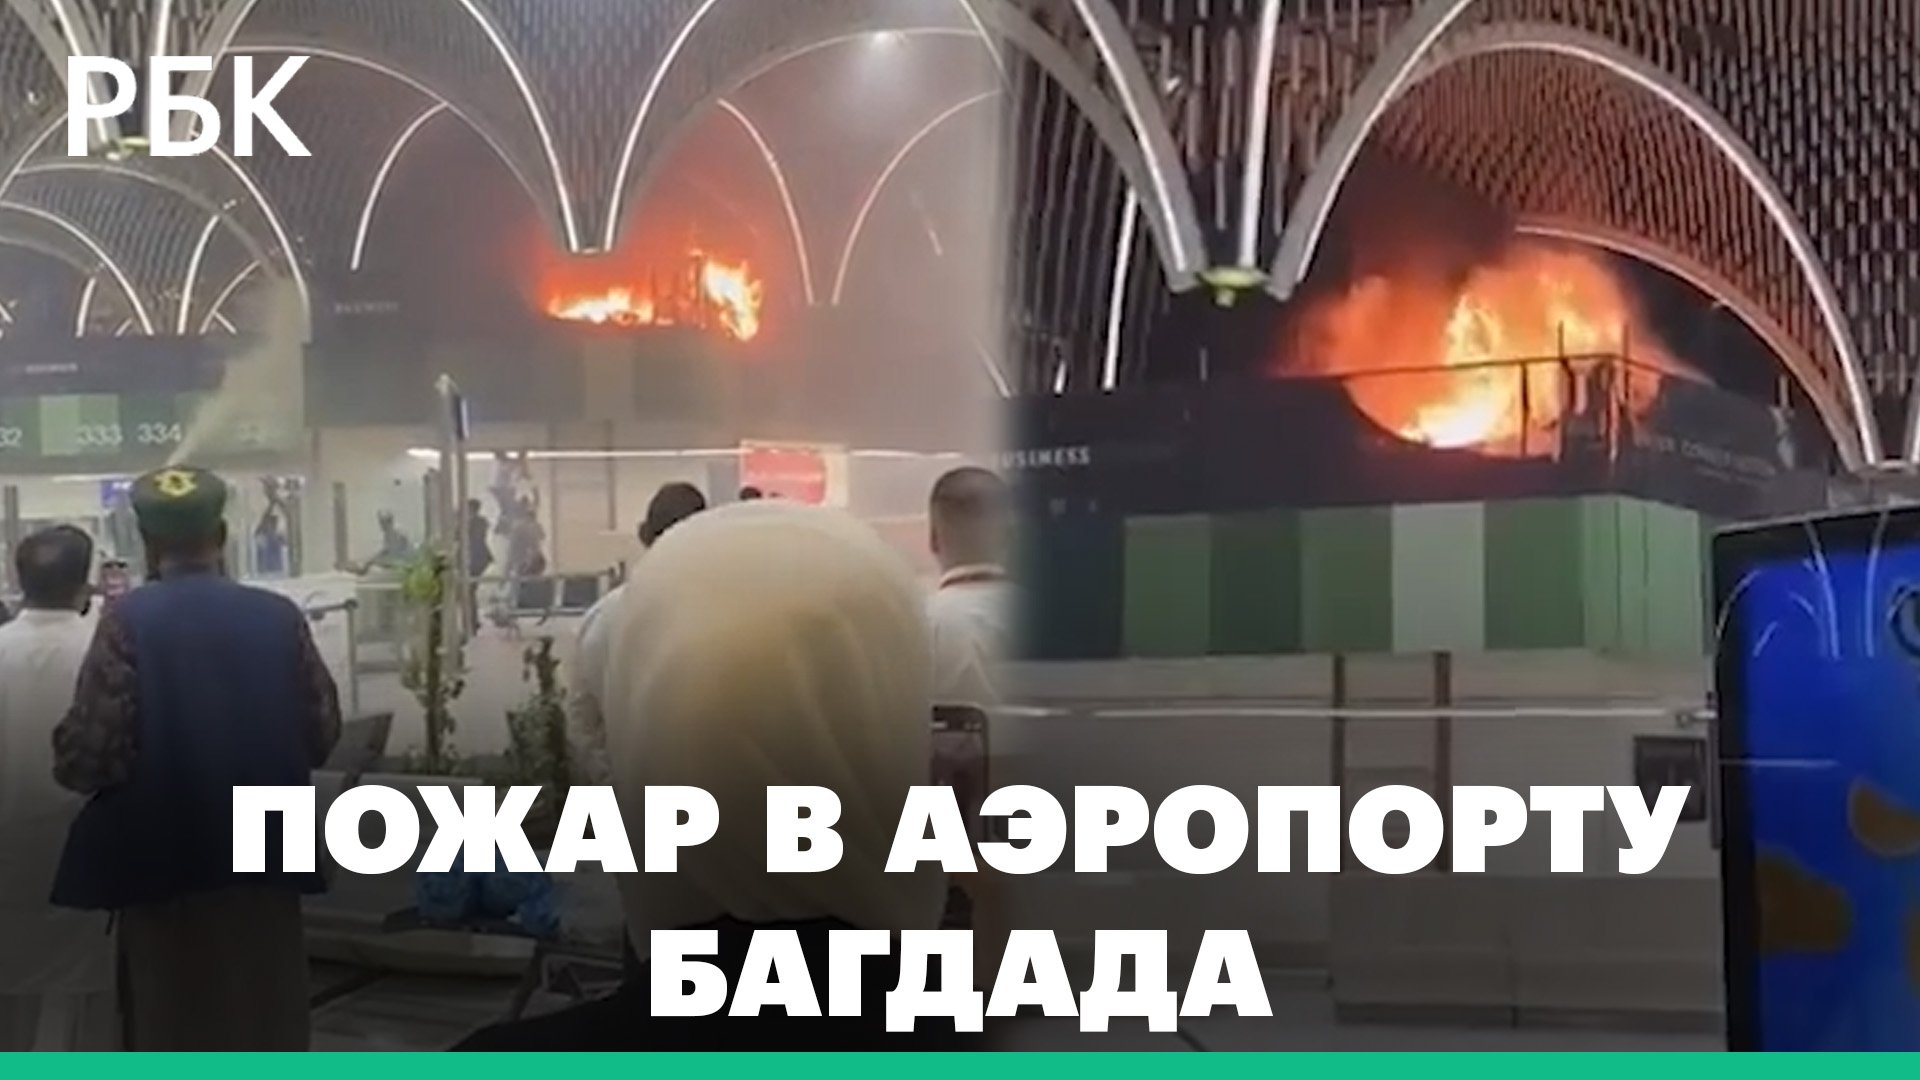 В аэропорту Багдада произошел пожар. Видео